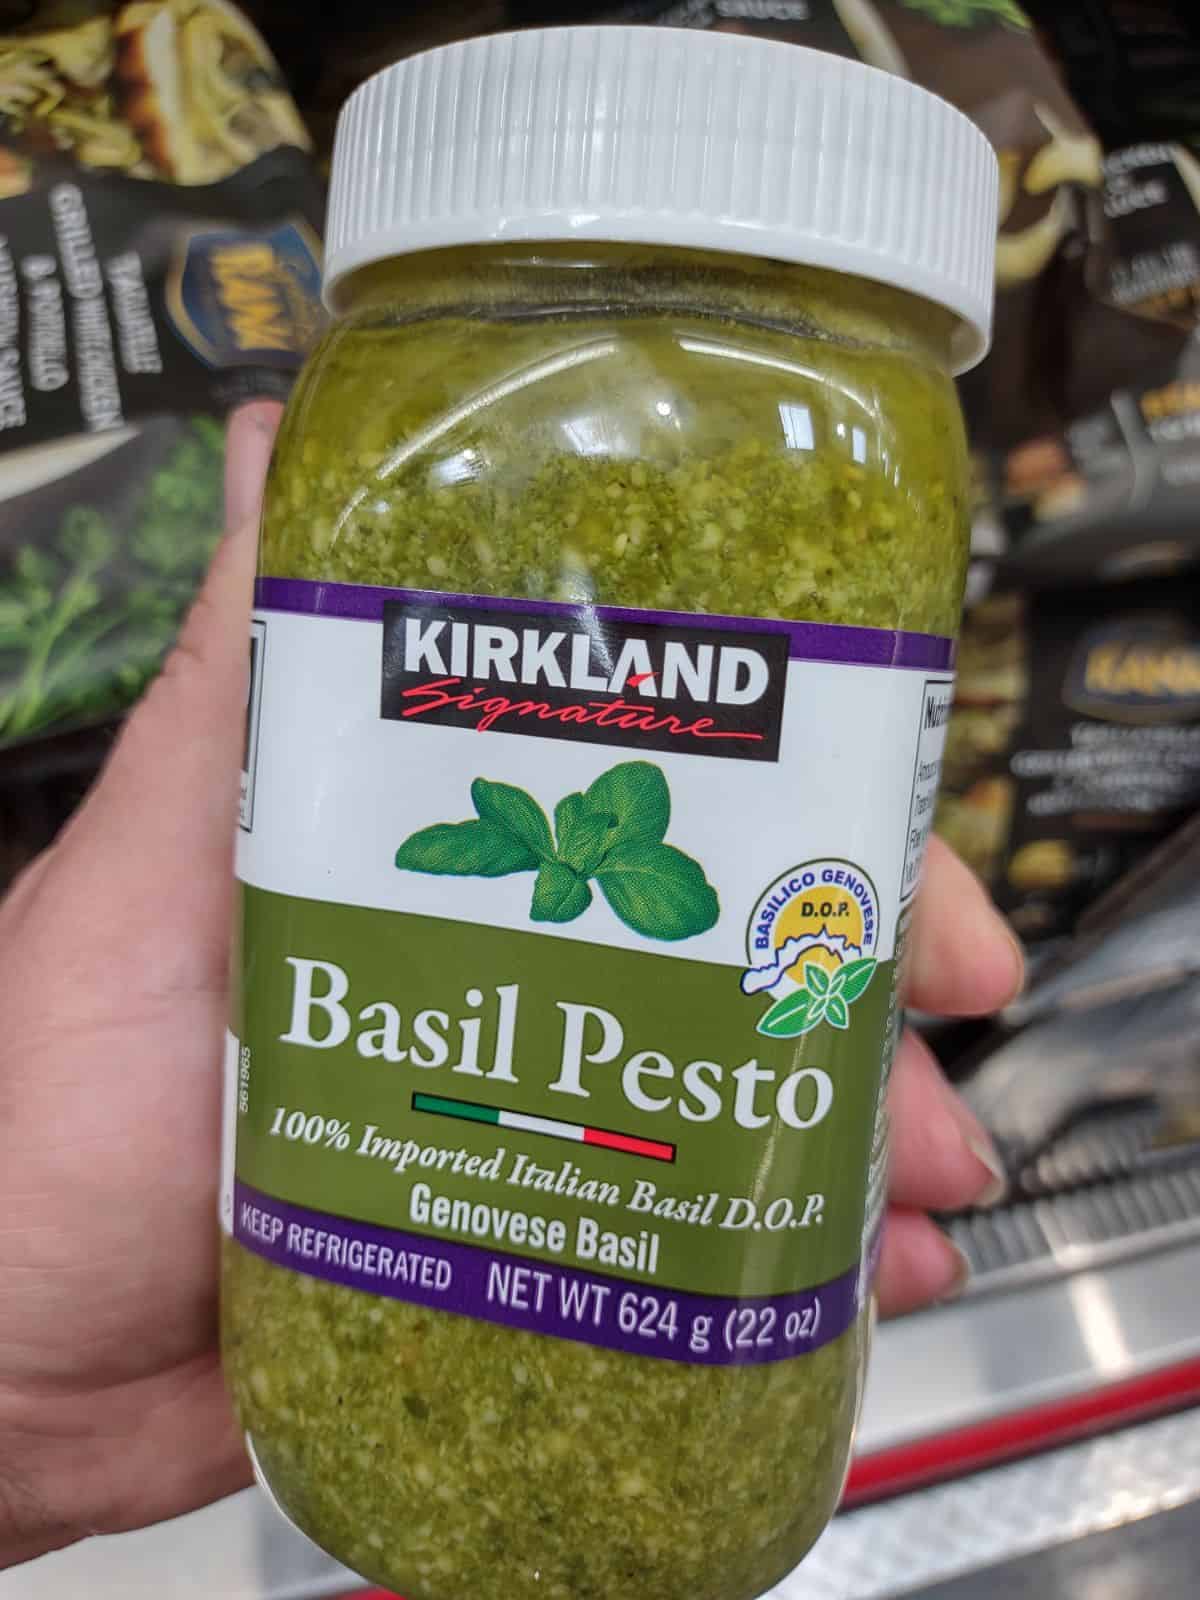 Holding up a jar of Kirkland Brand Basil Pesto with 100% Imported Italian Basil DOP.